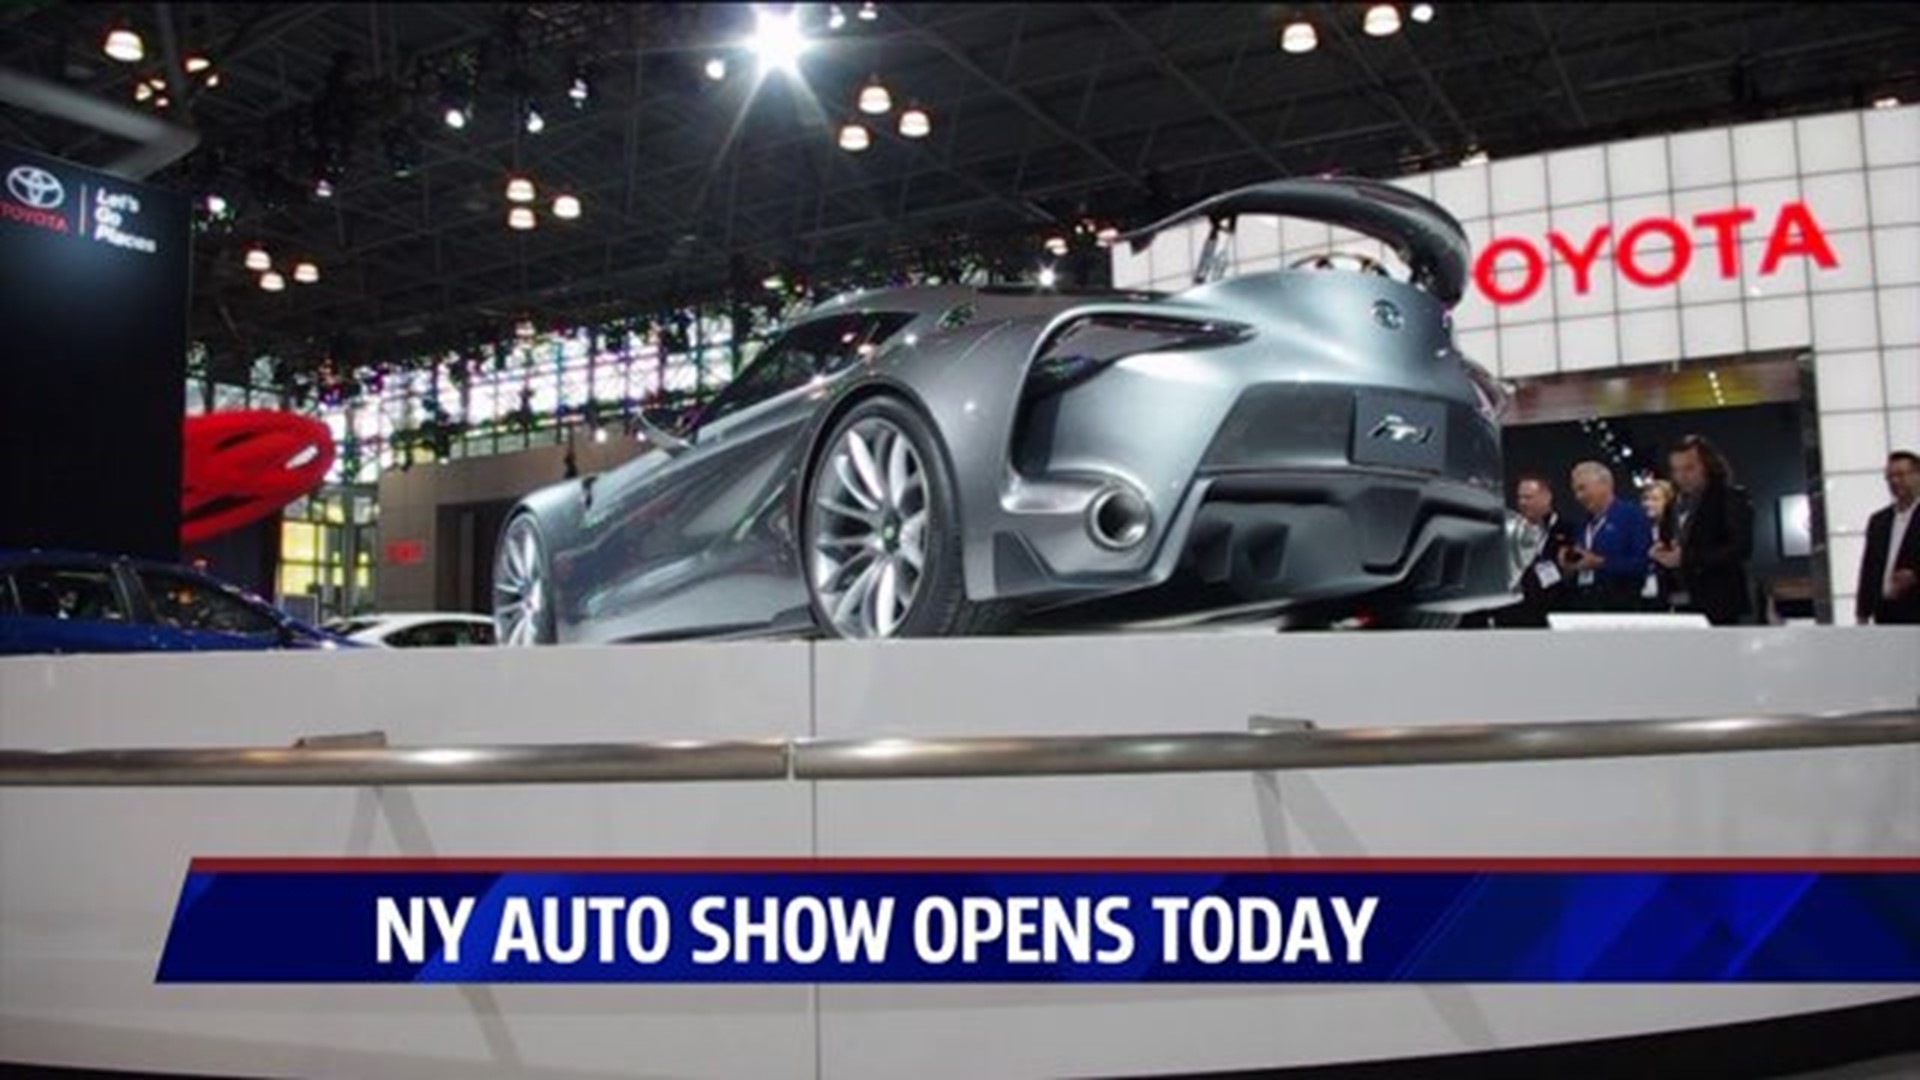 NY International Auto Show runs through April 12